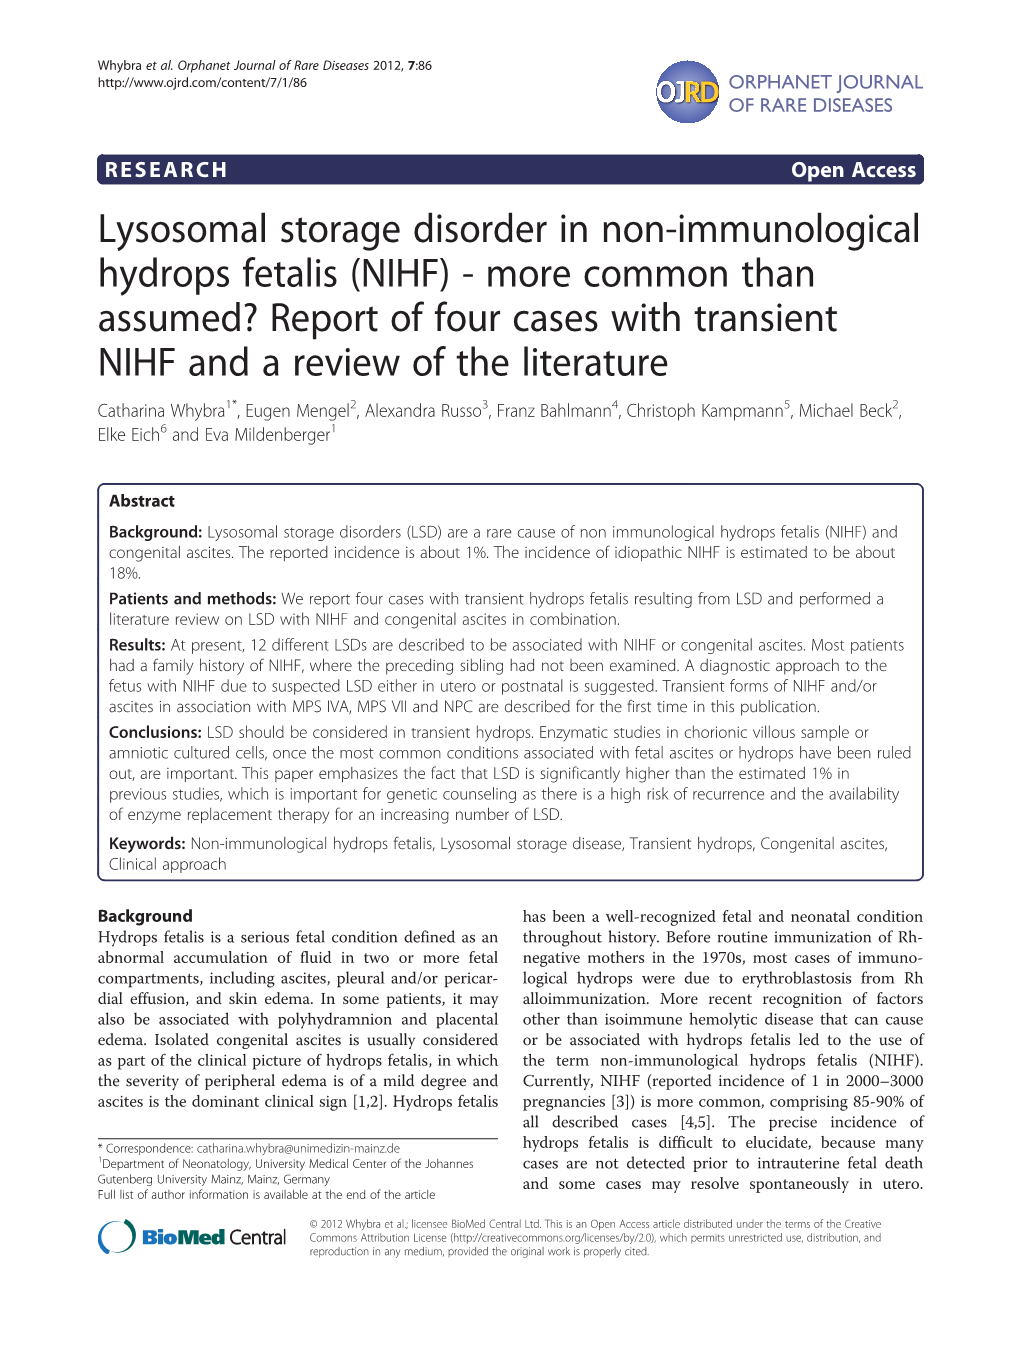 Lysosomal Storage Disorder in Non-Immunological Hydrops Fetalis